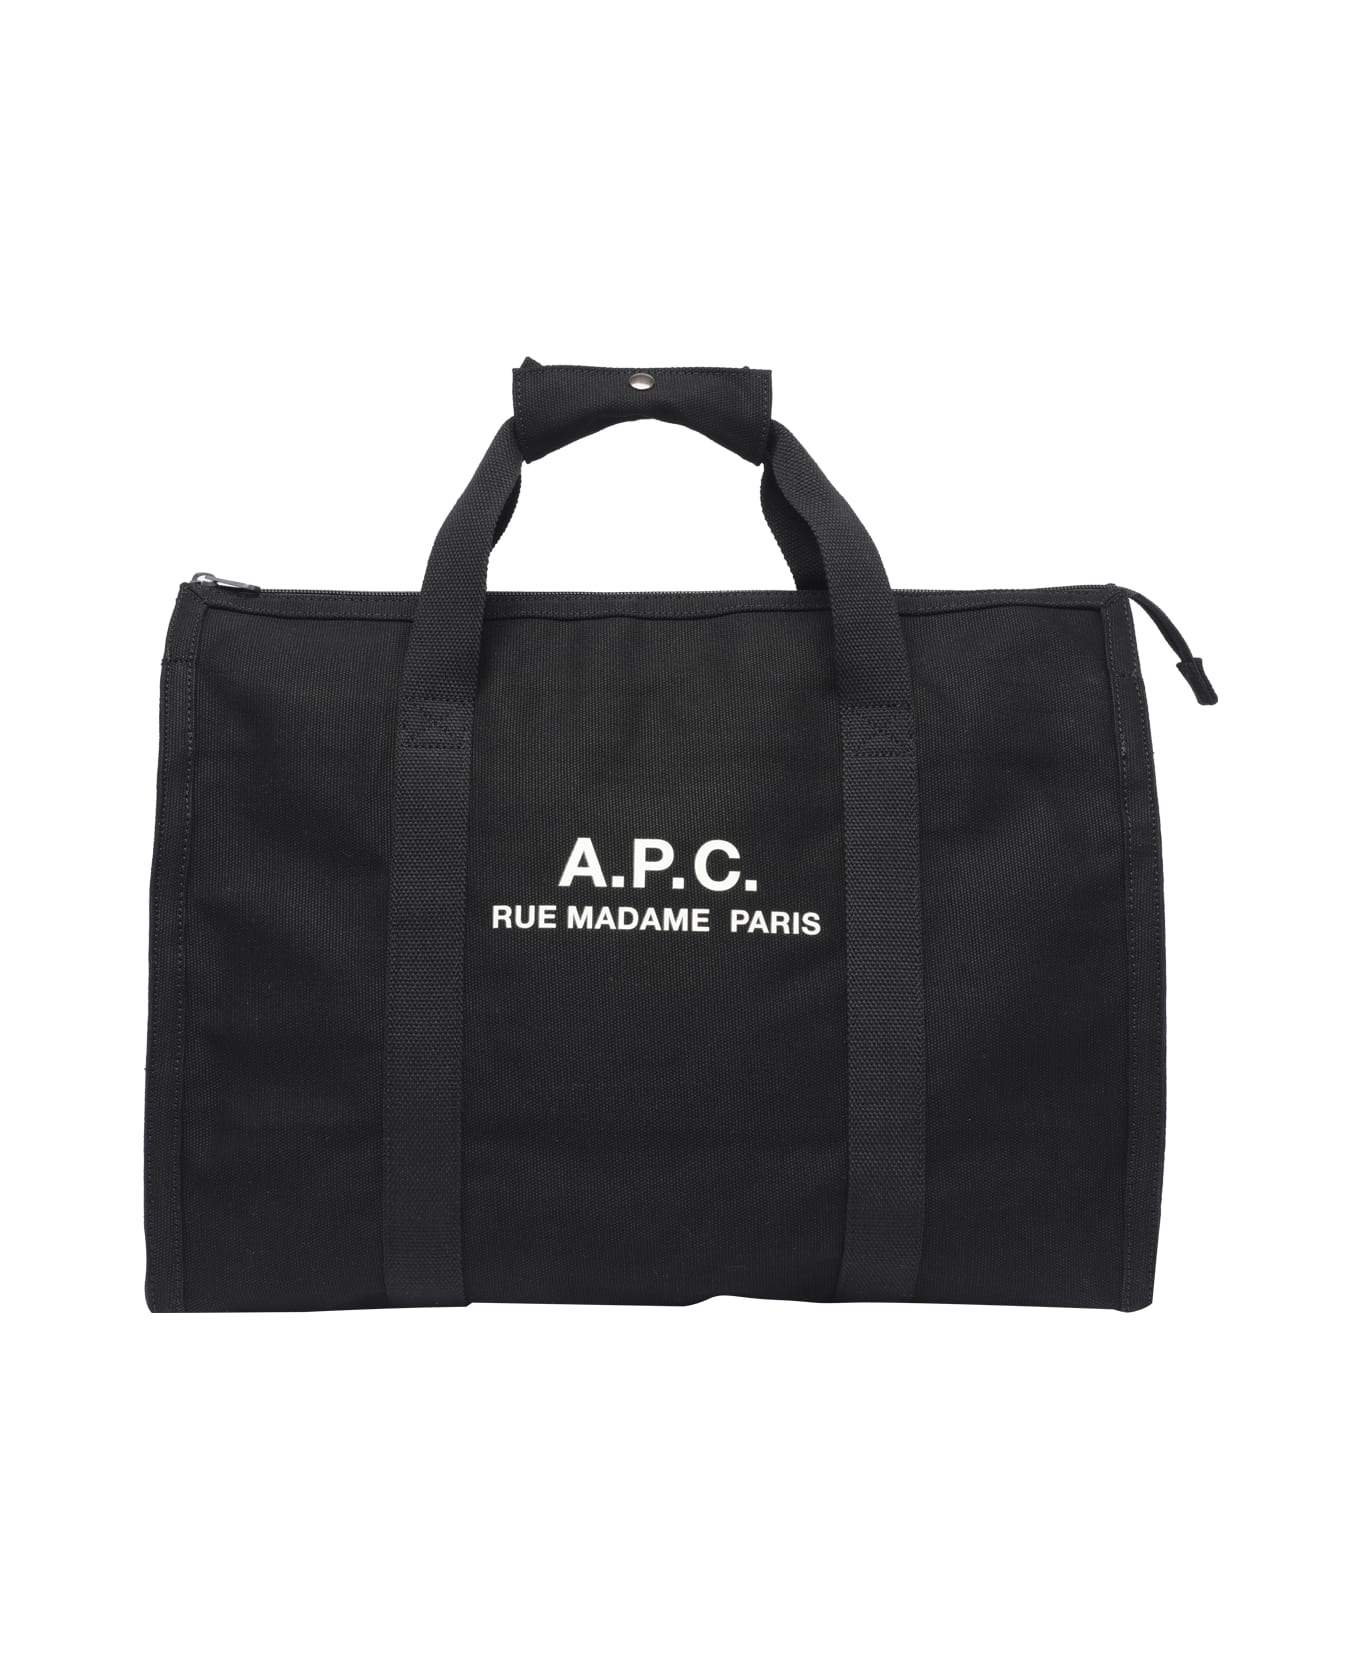 A.P.C. Recuperation Gym Bag Tote - BLACK